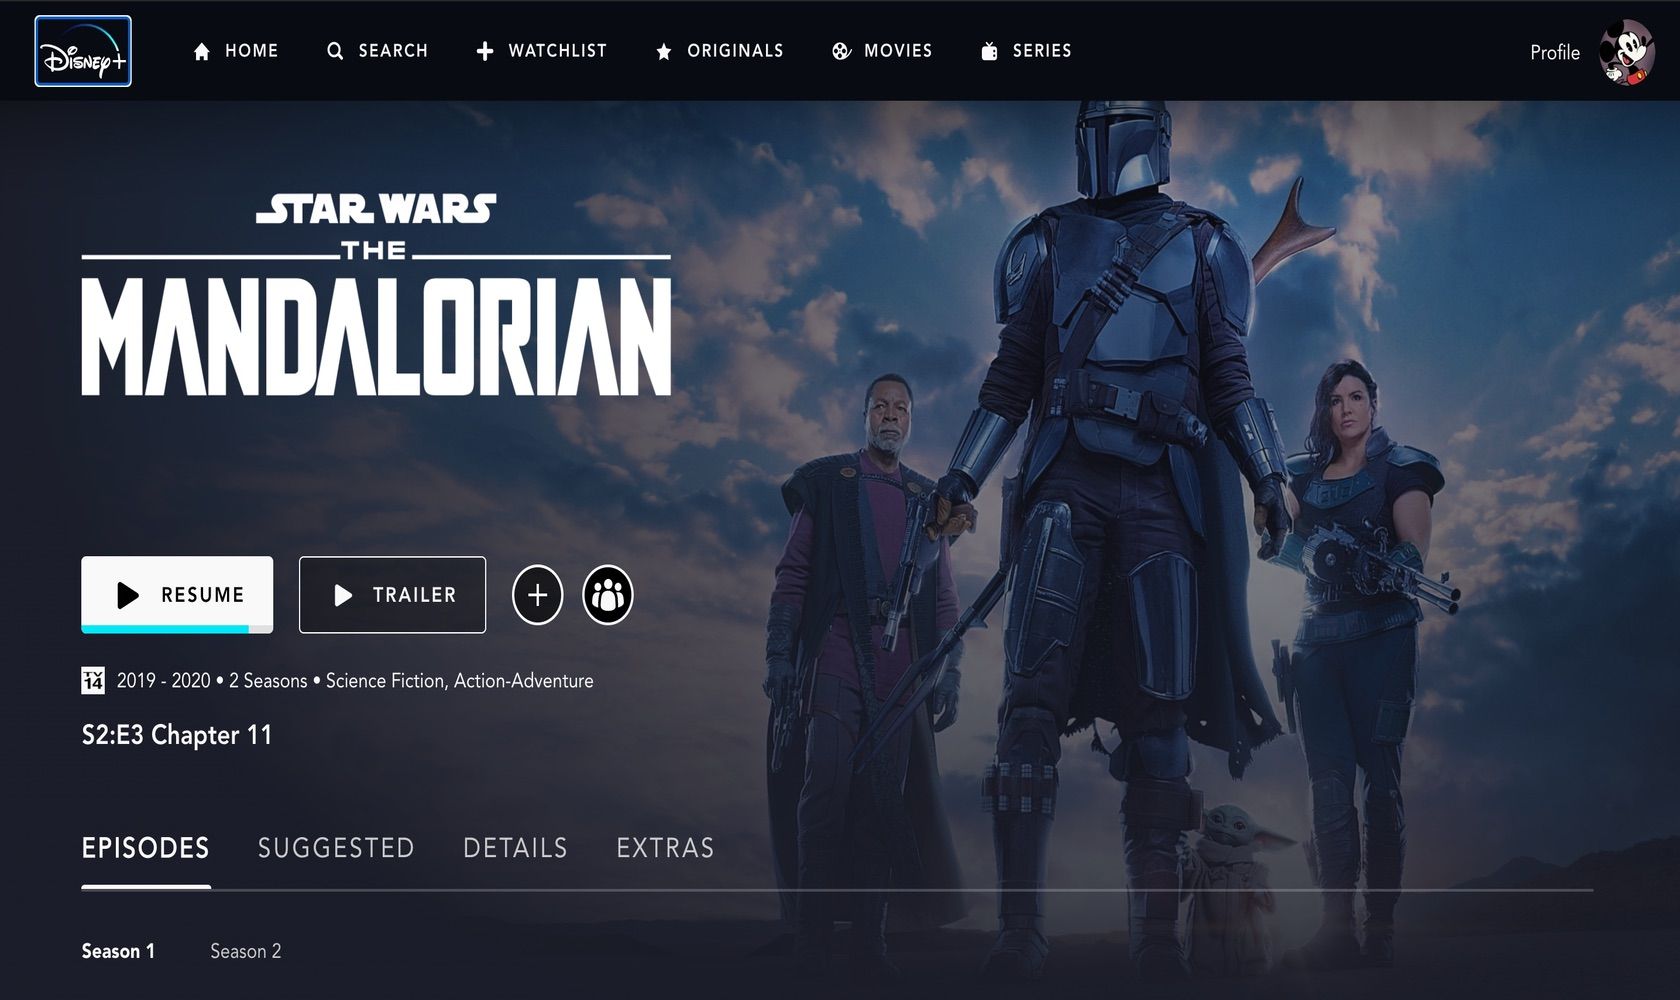 The Mandalorian preview page on the Disney Plus web app